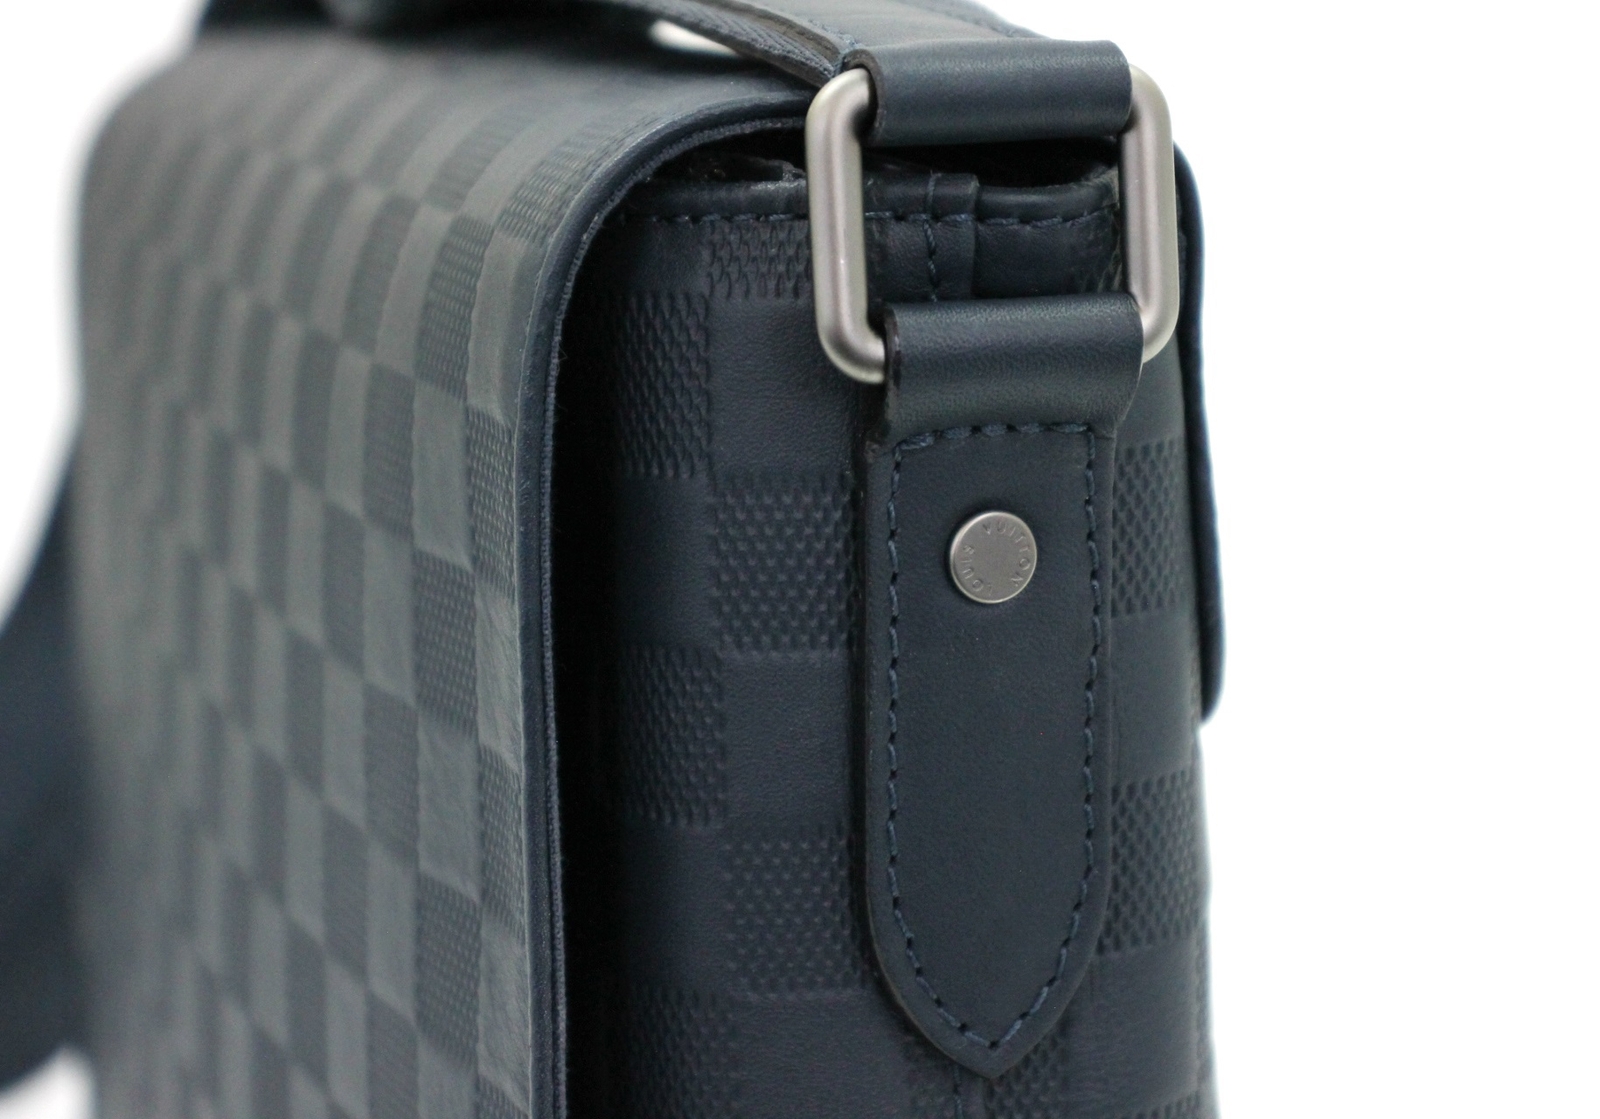 Louis Vuitton District PM Damier Infini Leather Messenger Bag Cosmos N41285 | eBay